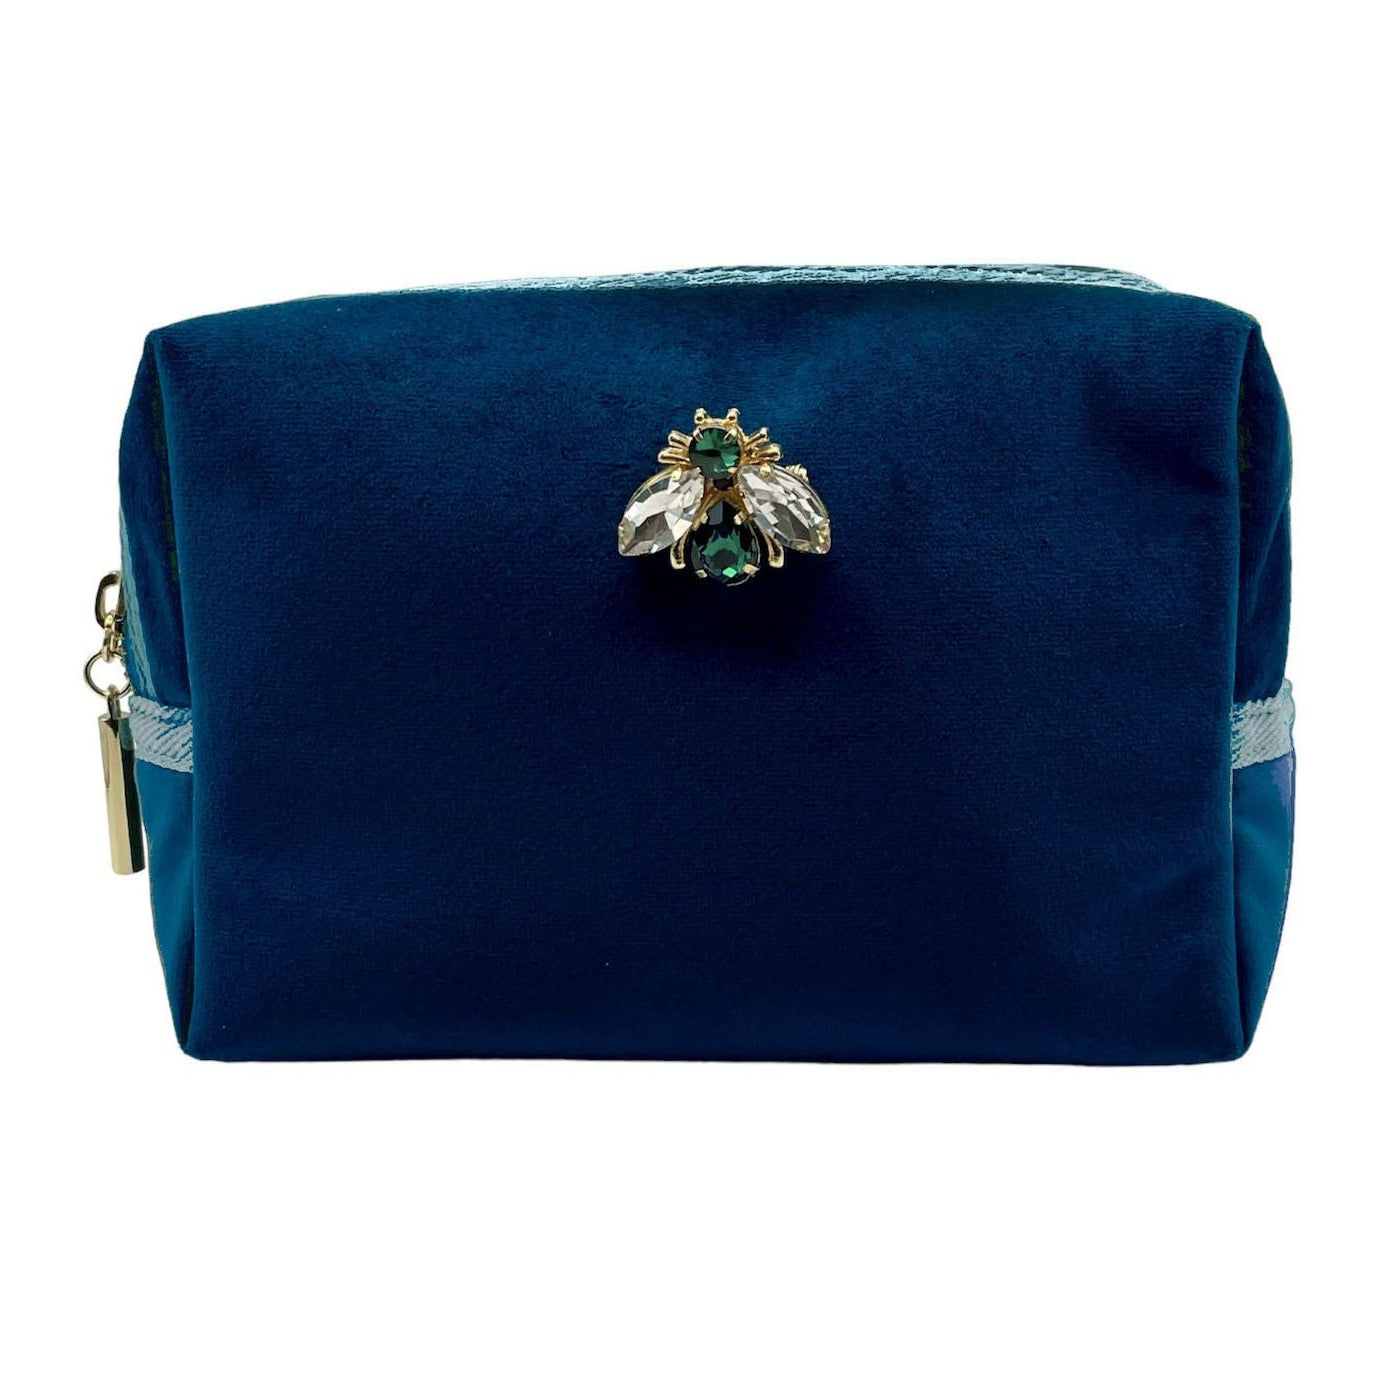 Blue make-up bag & luna bee pin - recycled velvet